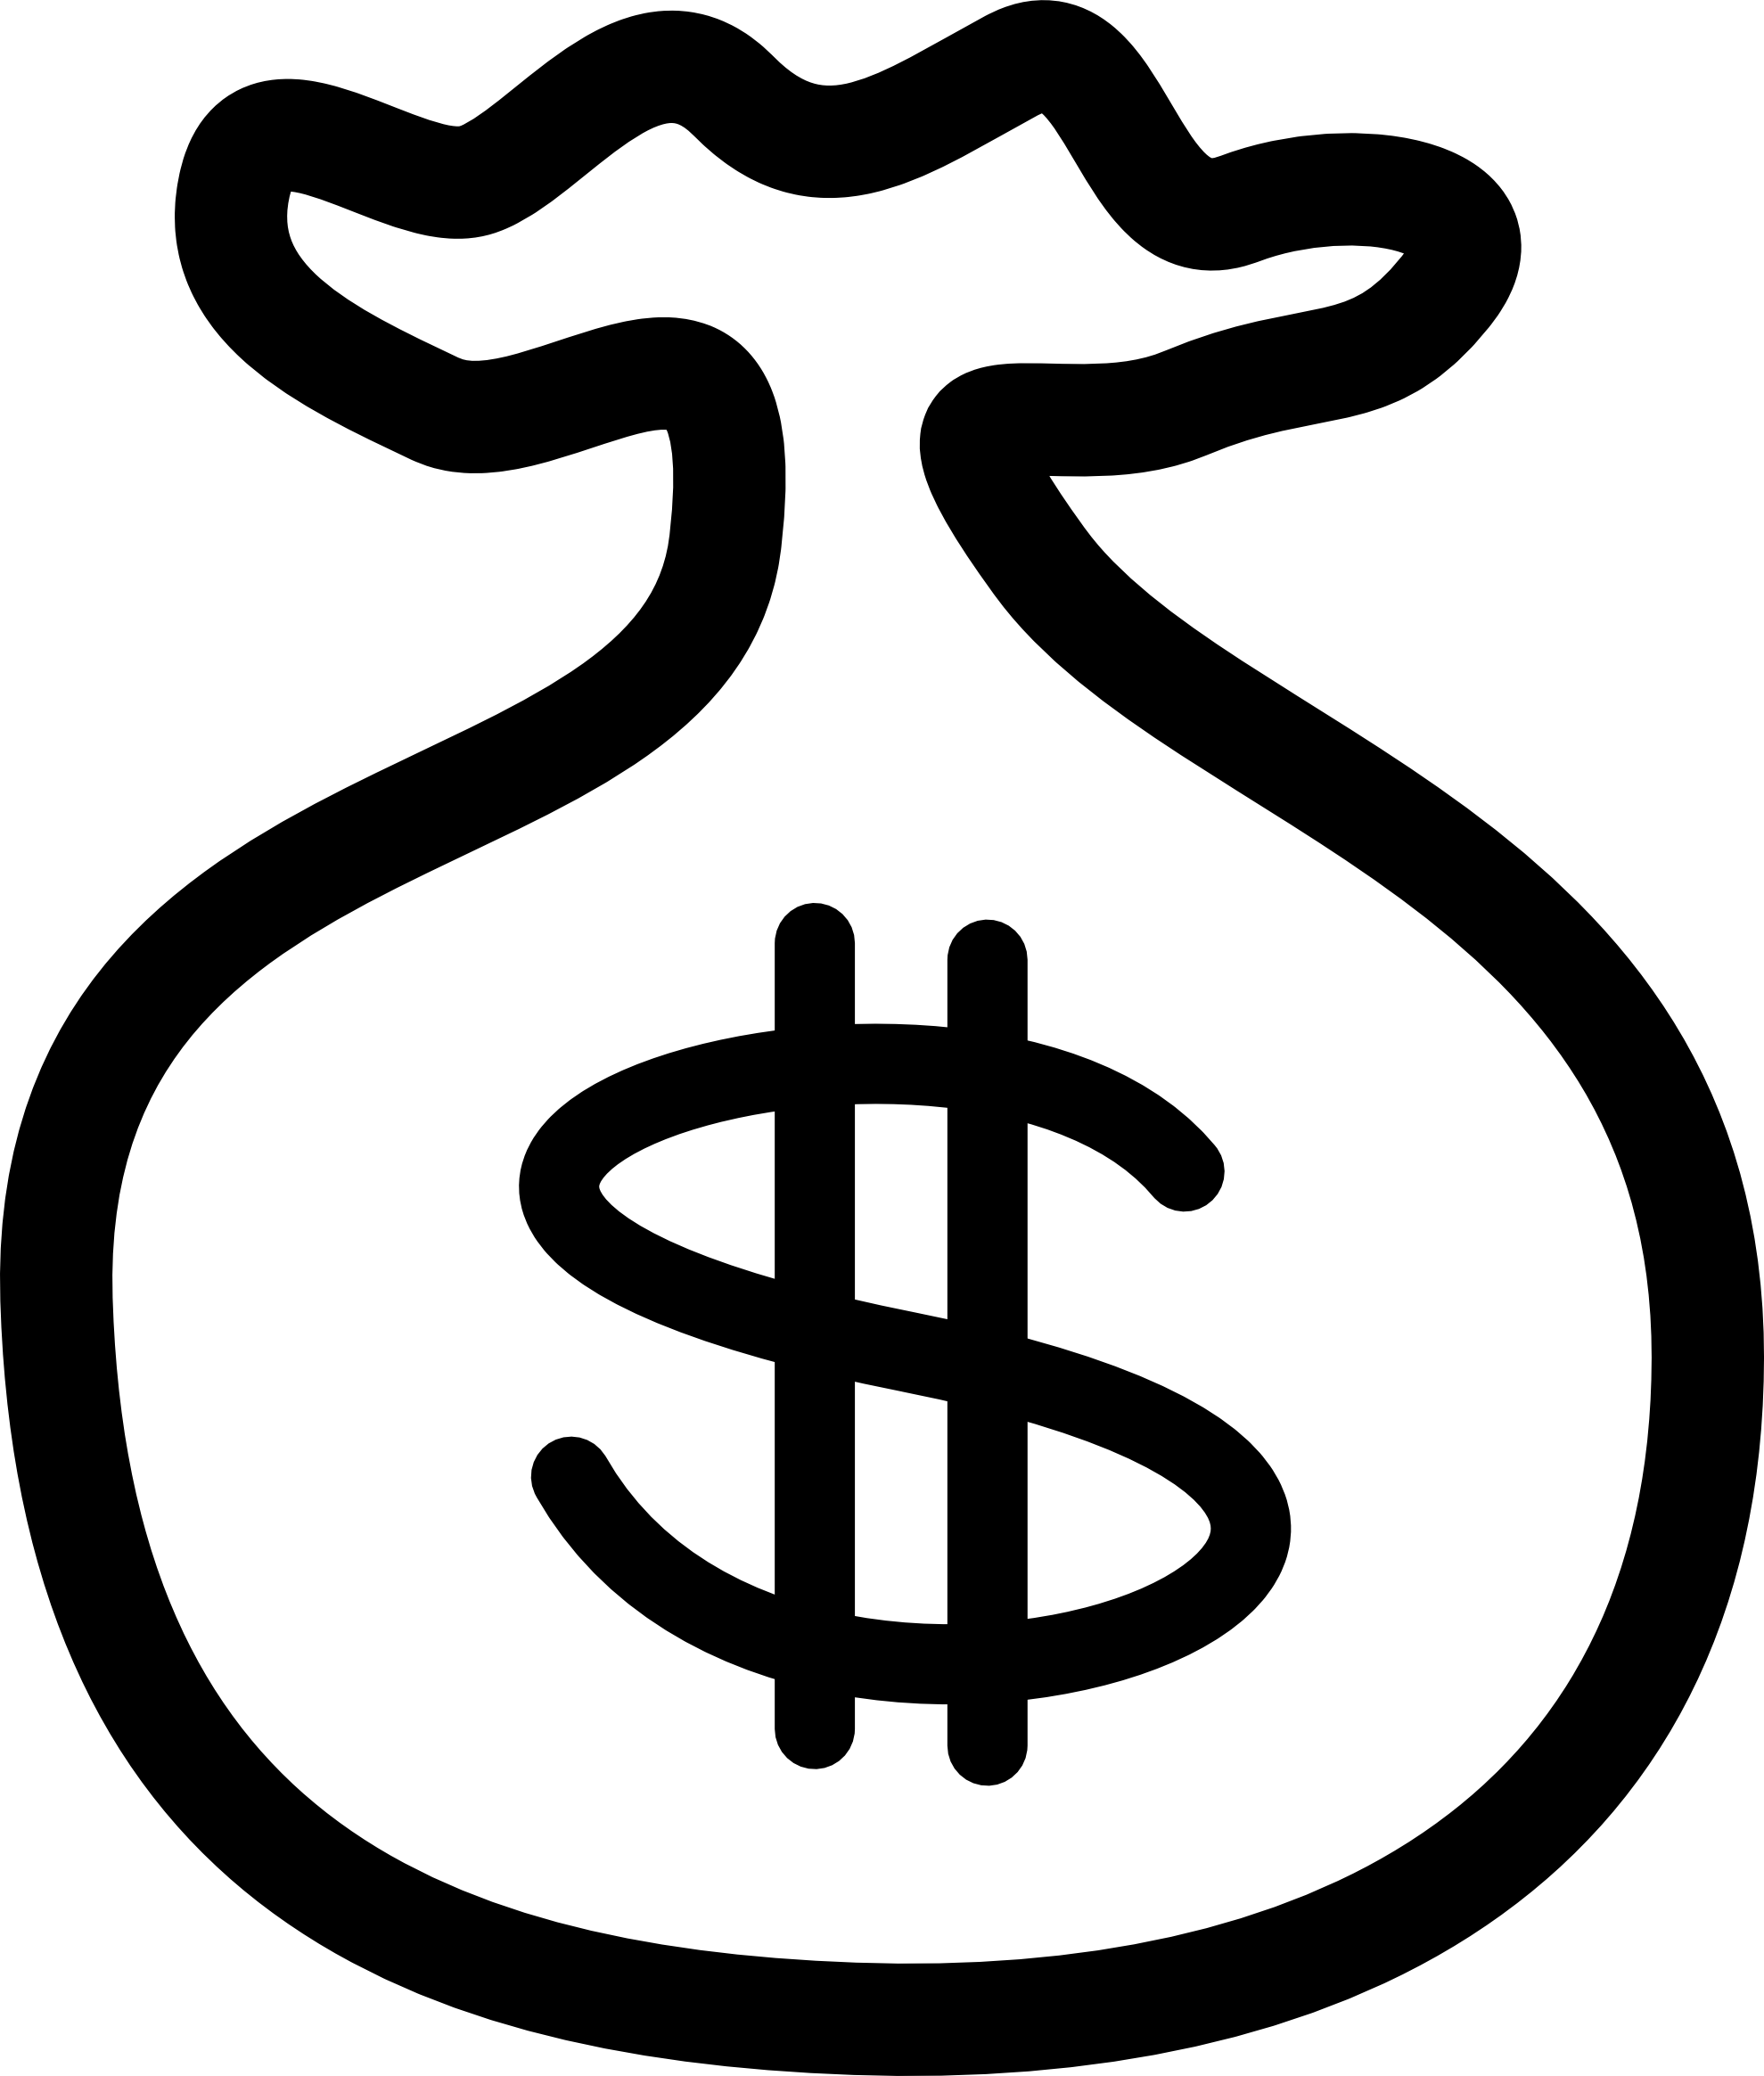 Money Bag Clip Art Black And White - Free Clipart ...